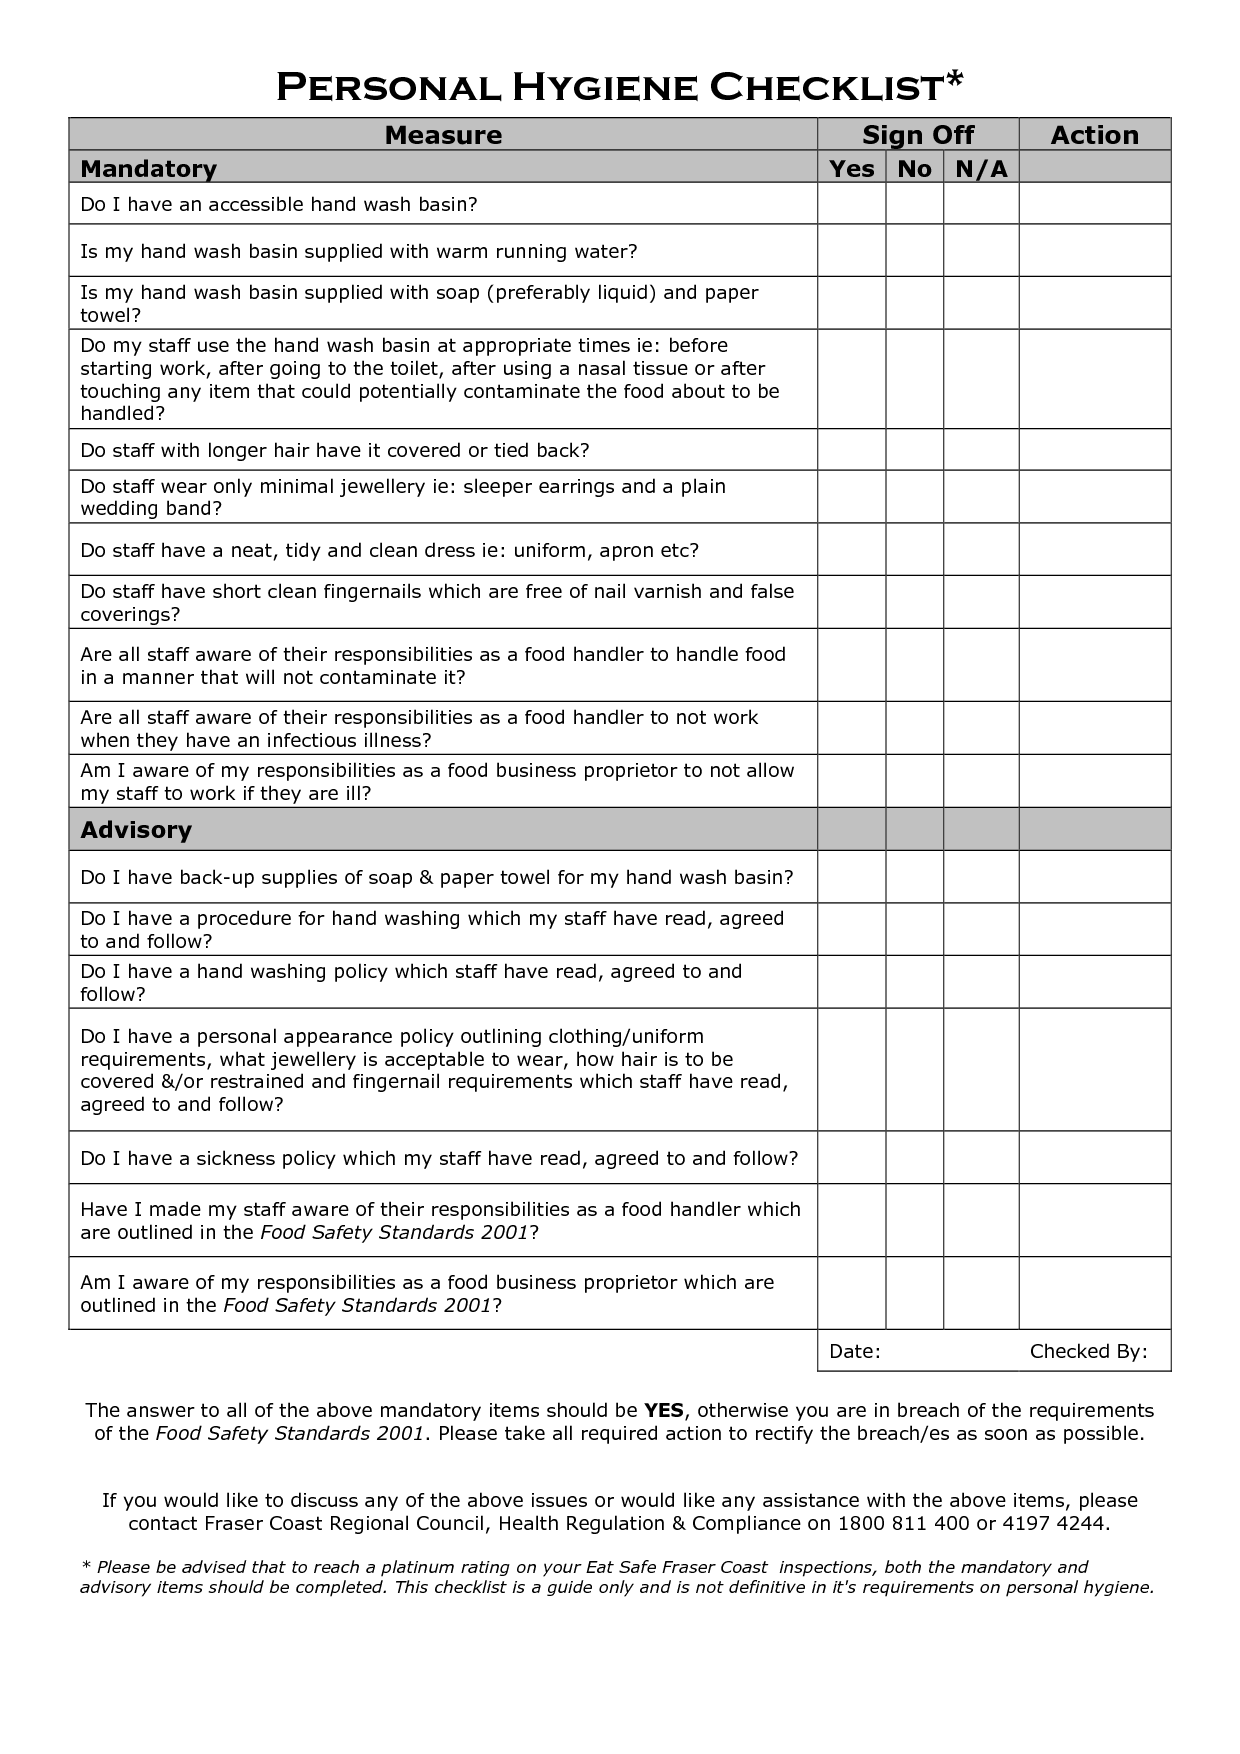 Personal Hygiene Checklist Image